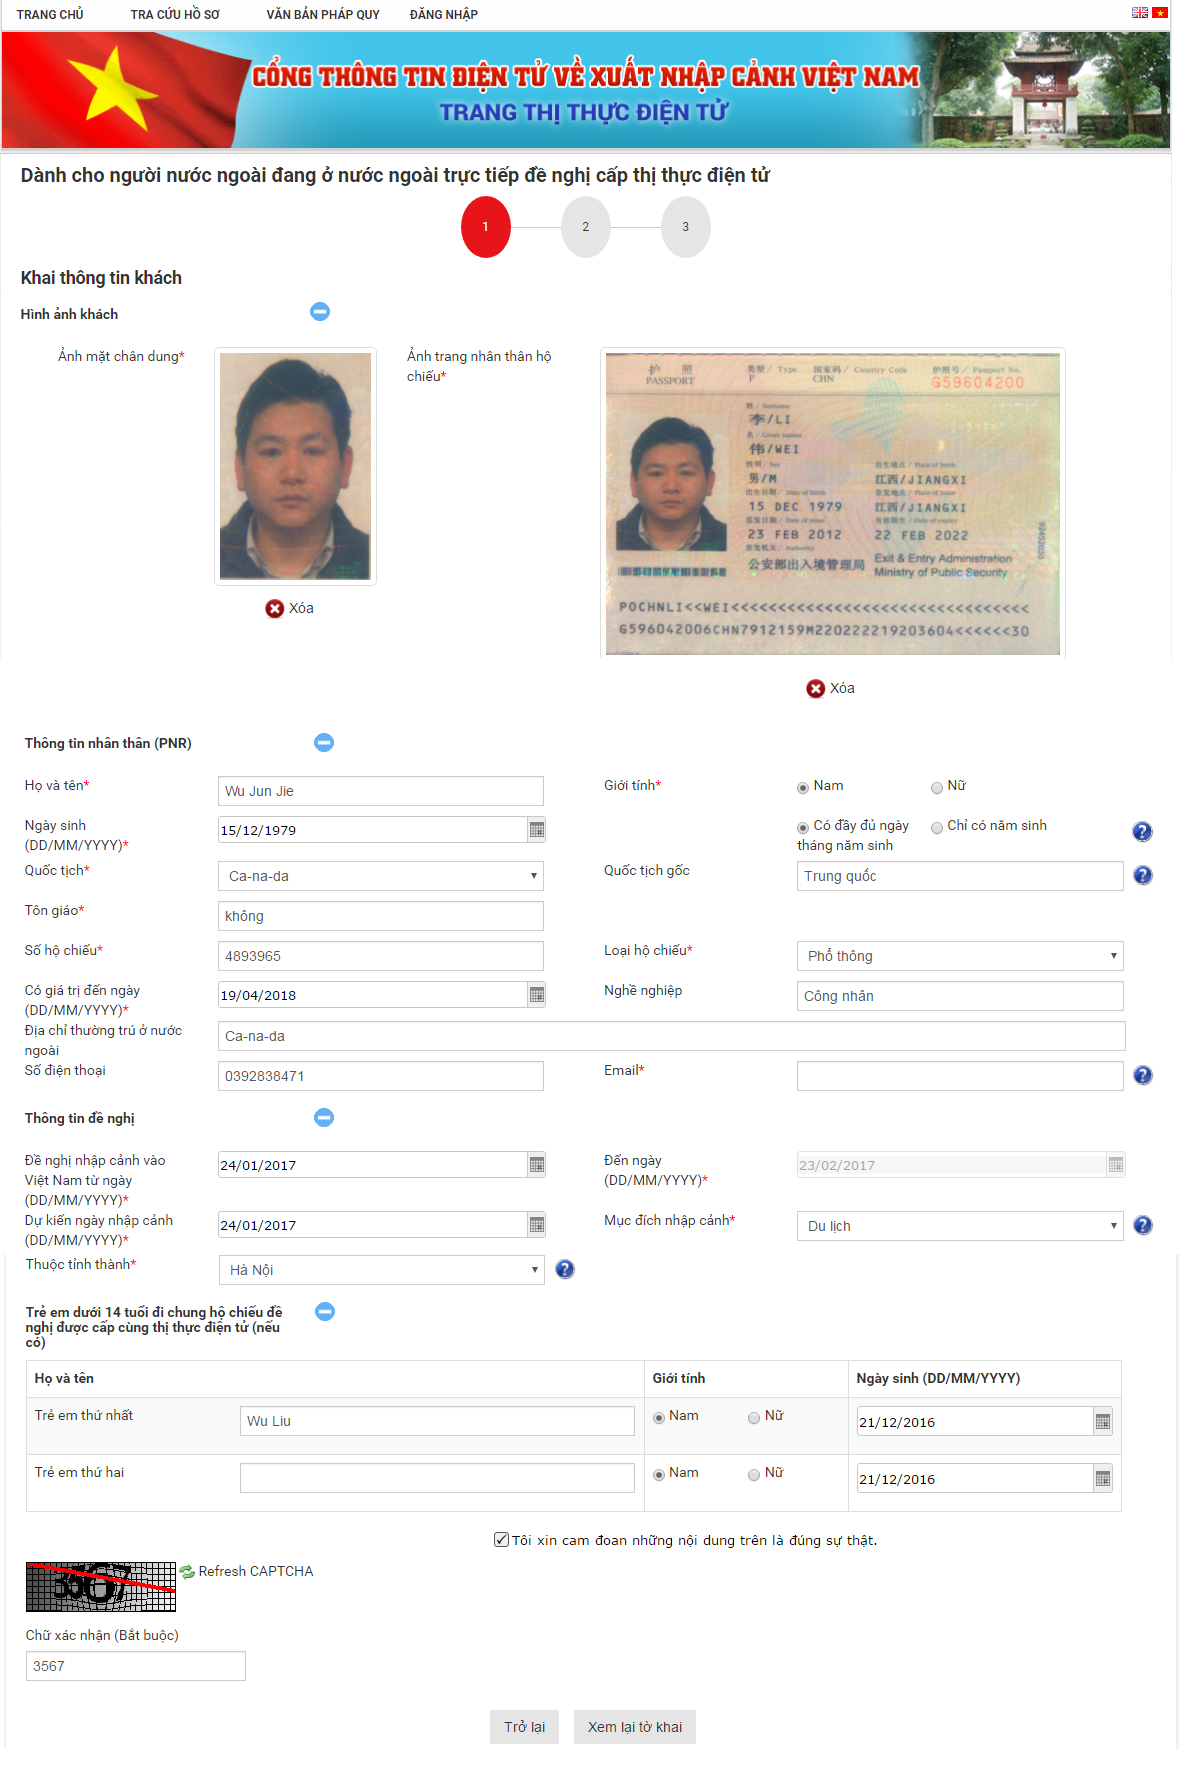 Foreigner apply for e-visa - National portal on Immigration